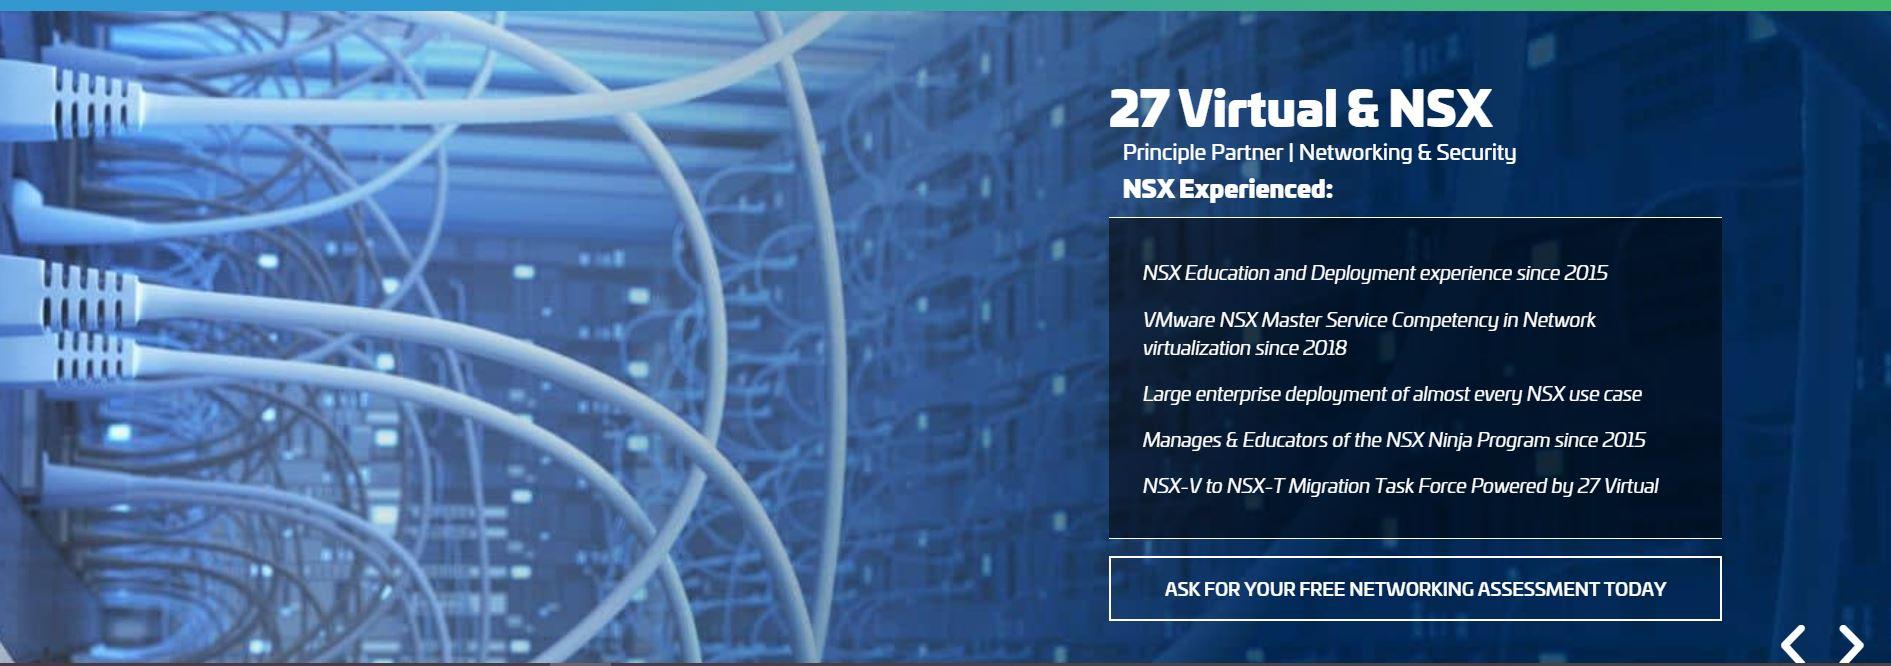 Cloud Architecture Services | VMware Support | 27 Virtual